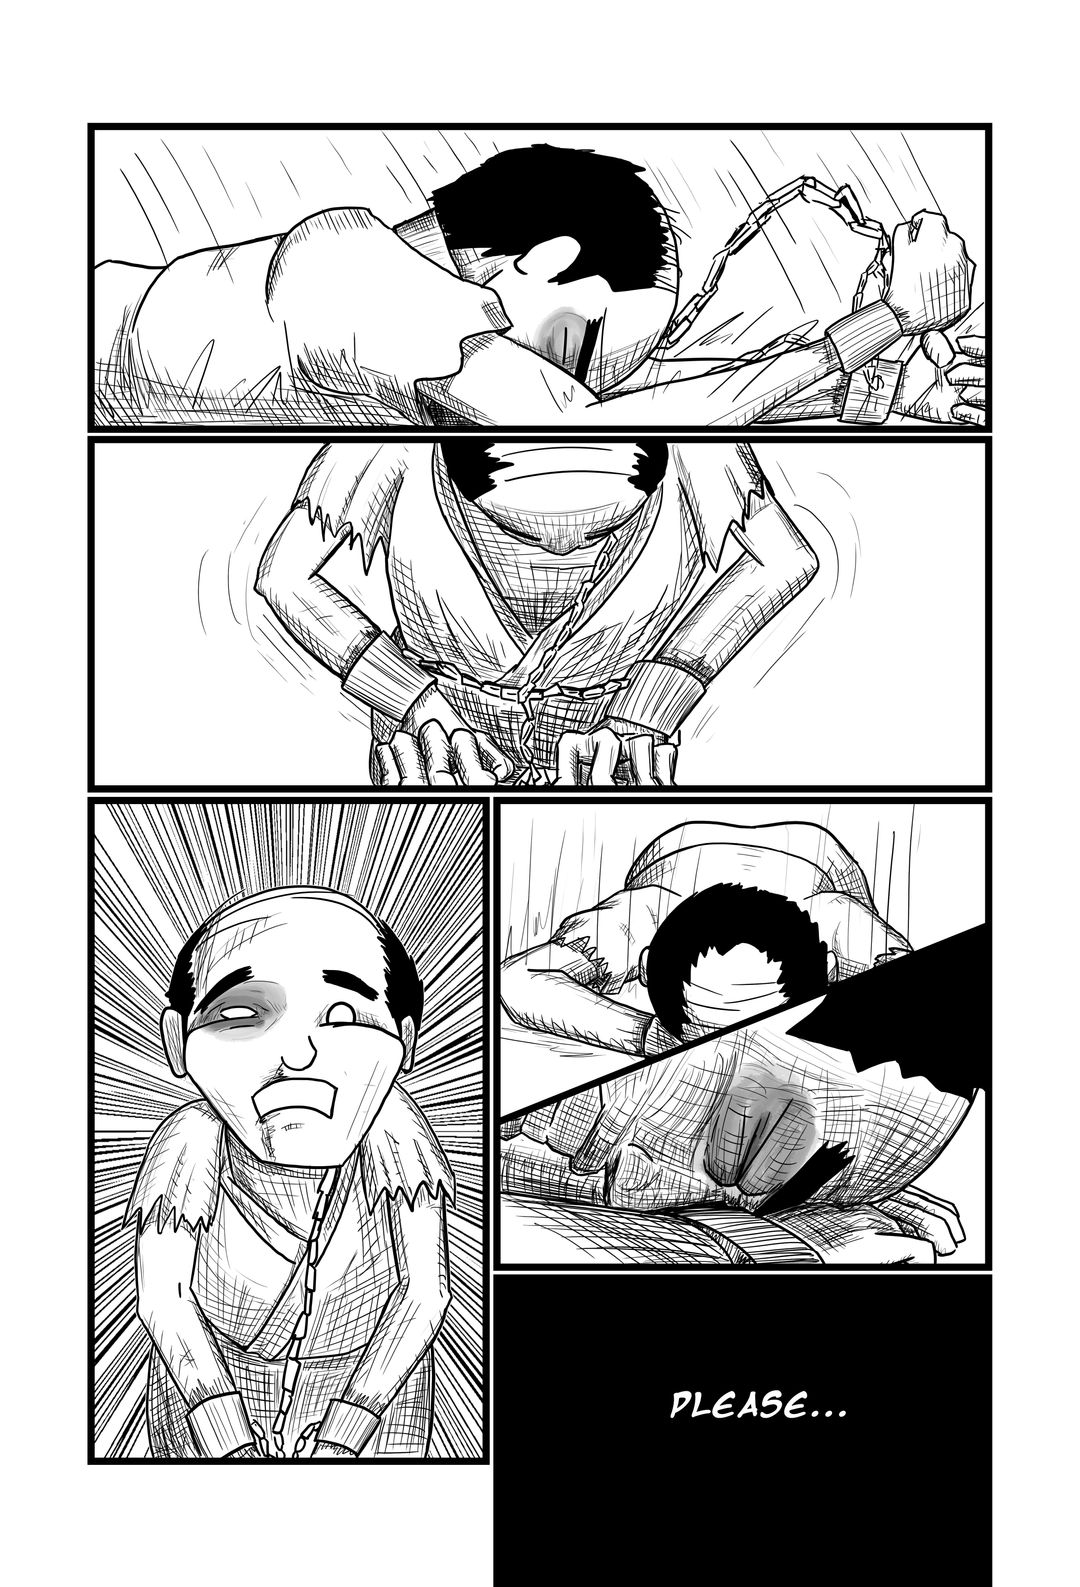 Shotgun Samurai 11 panel 6